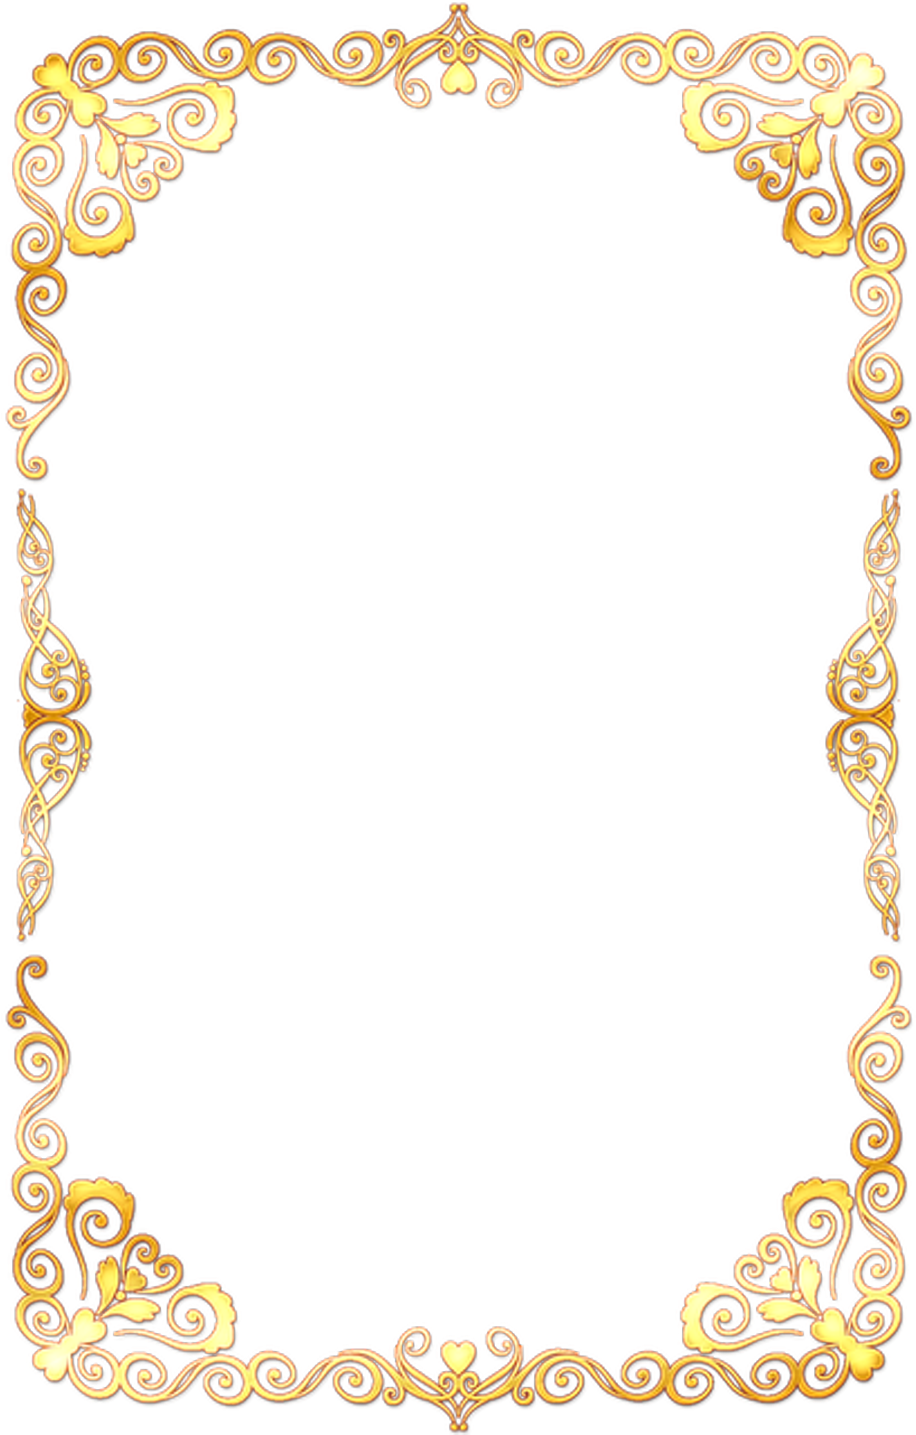 Download #adornment #adorno #moldura #quadro #borda #gold #golden -  Transparent Background Gold Border PNG Image with No Background 